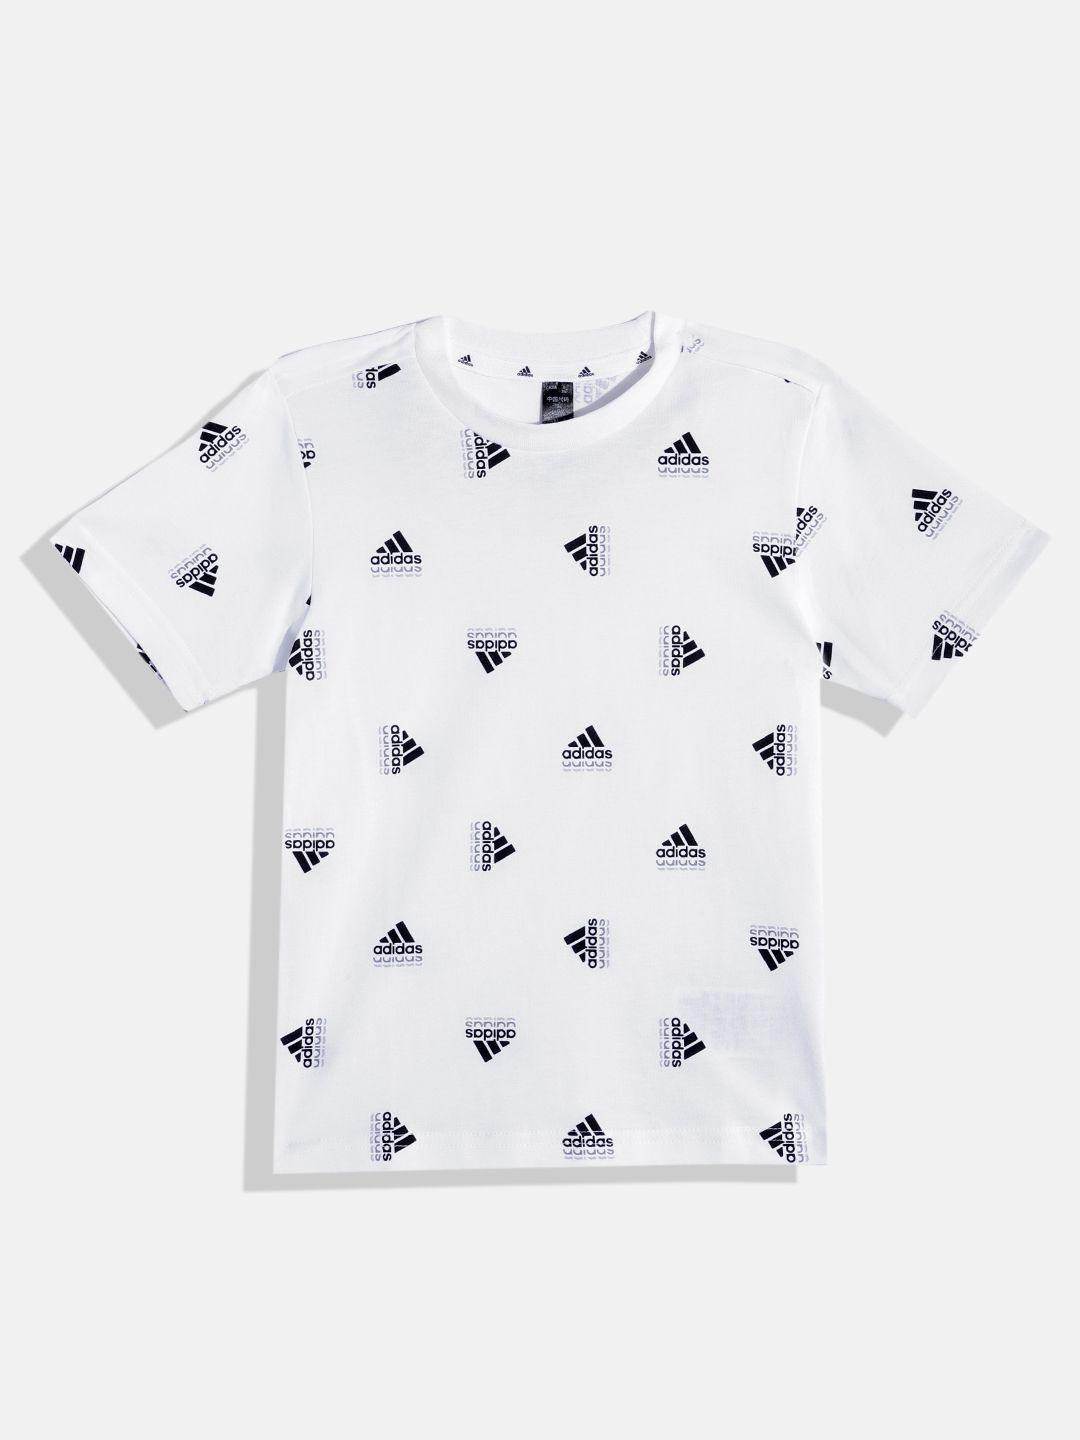 adidas-kids-brand-logo-printed-pure-cotton-lk-bluv-co-t-shirt